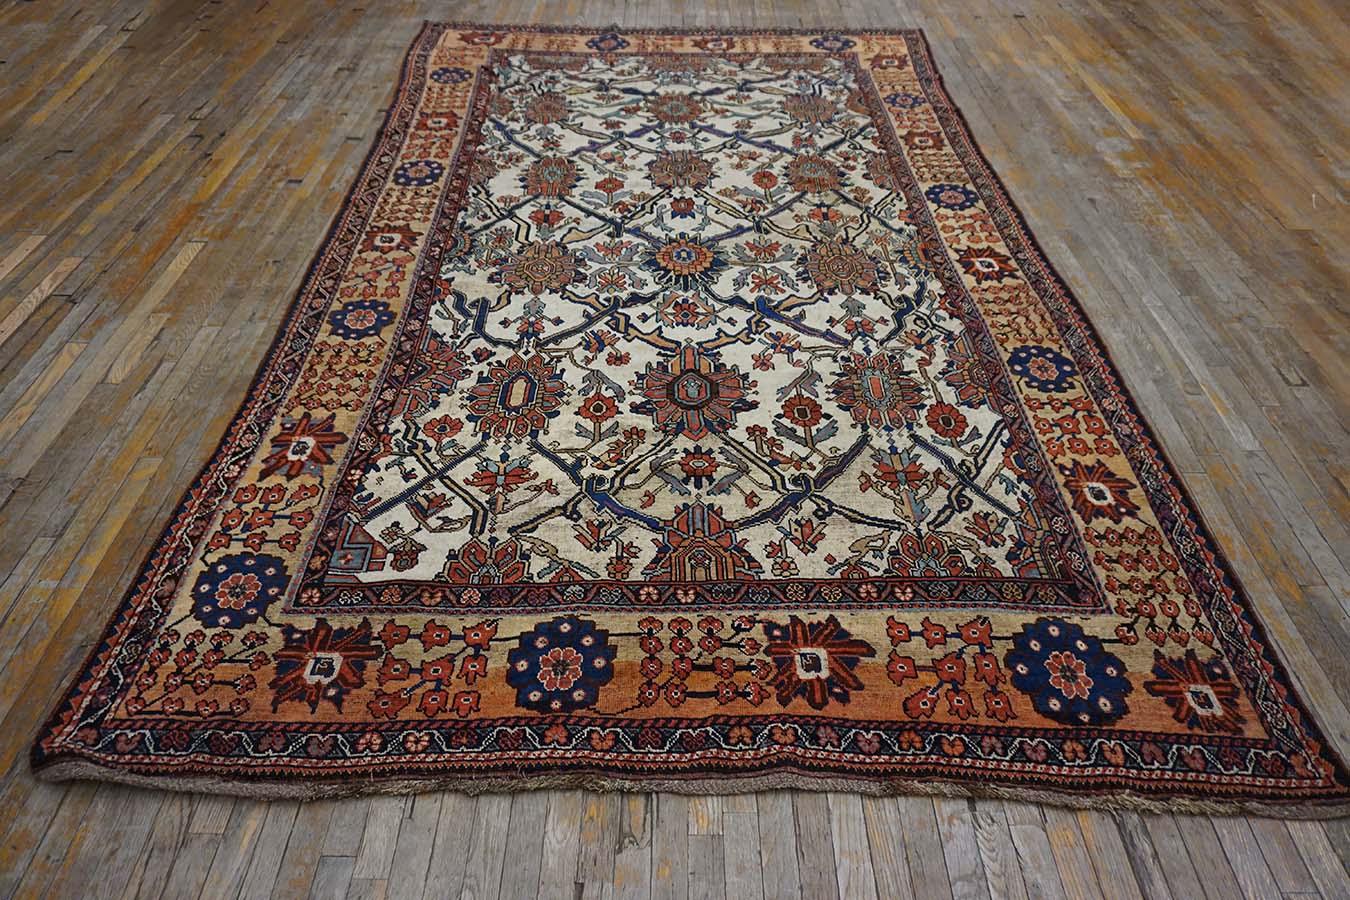 19th Century S. Persian, Fars region Bakhtiari carpet with design inspiration from 17th century Safavid weavings 